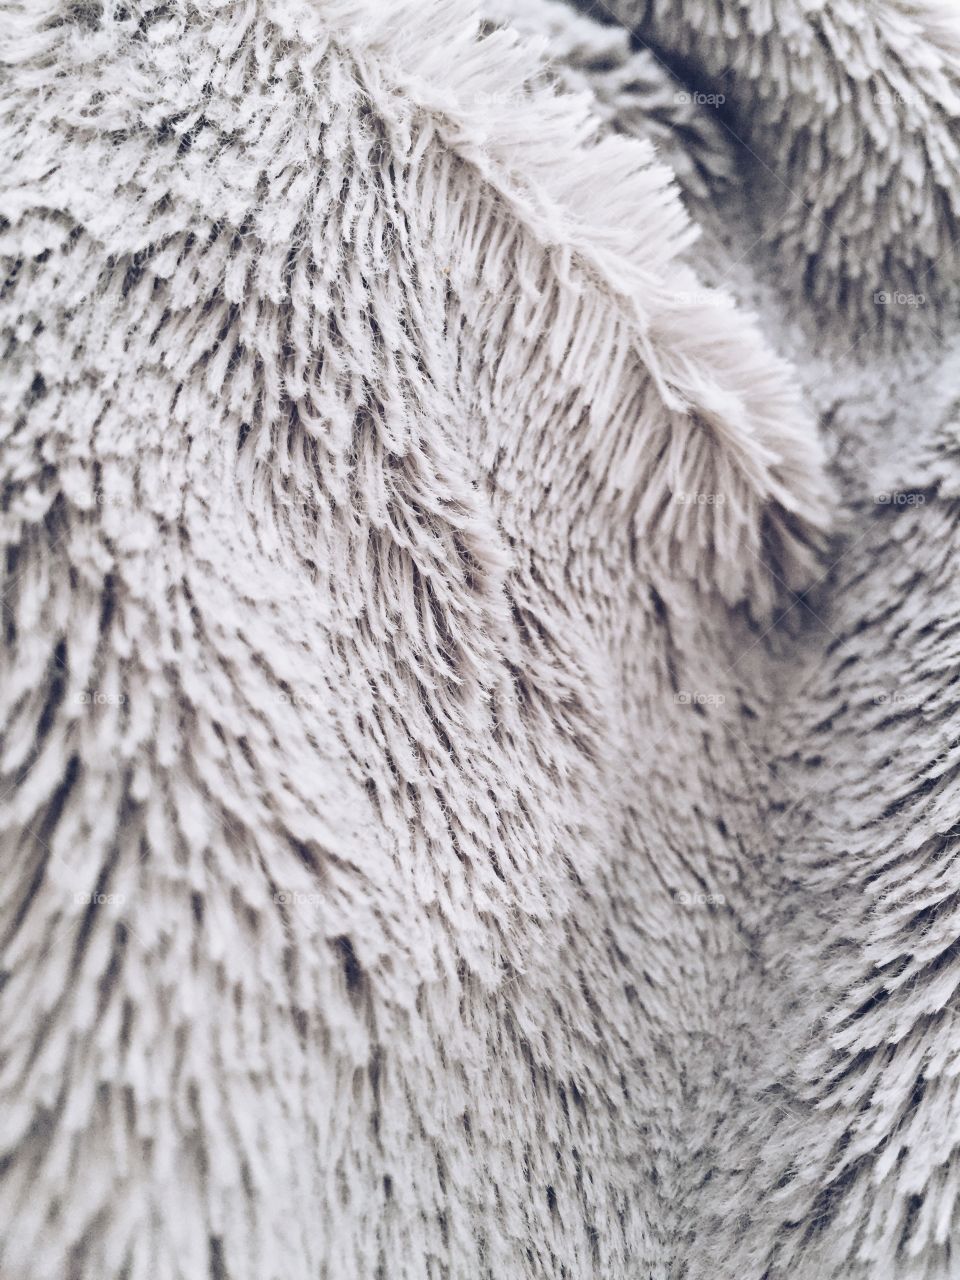 Fuzzy fiber texture closeup grey